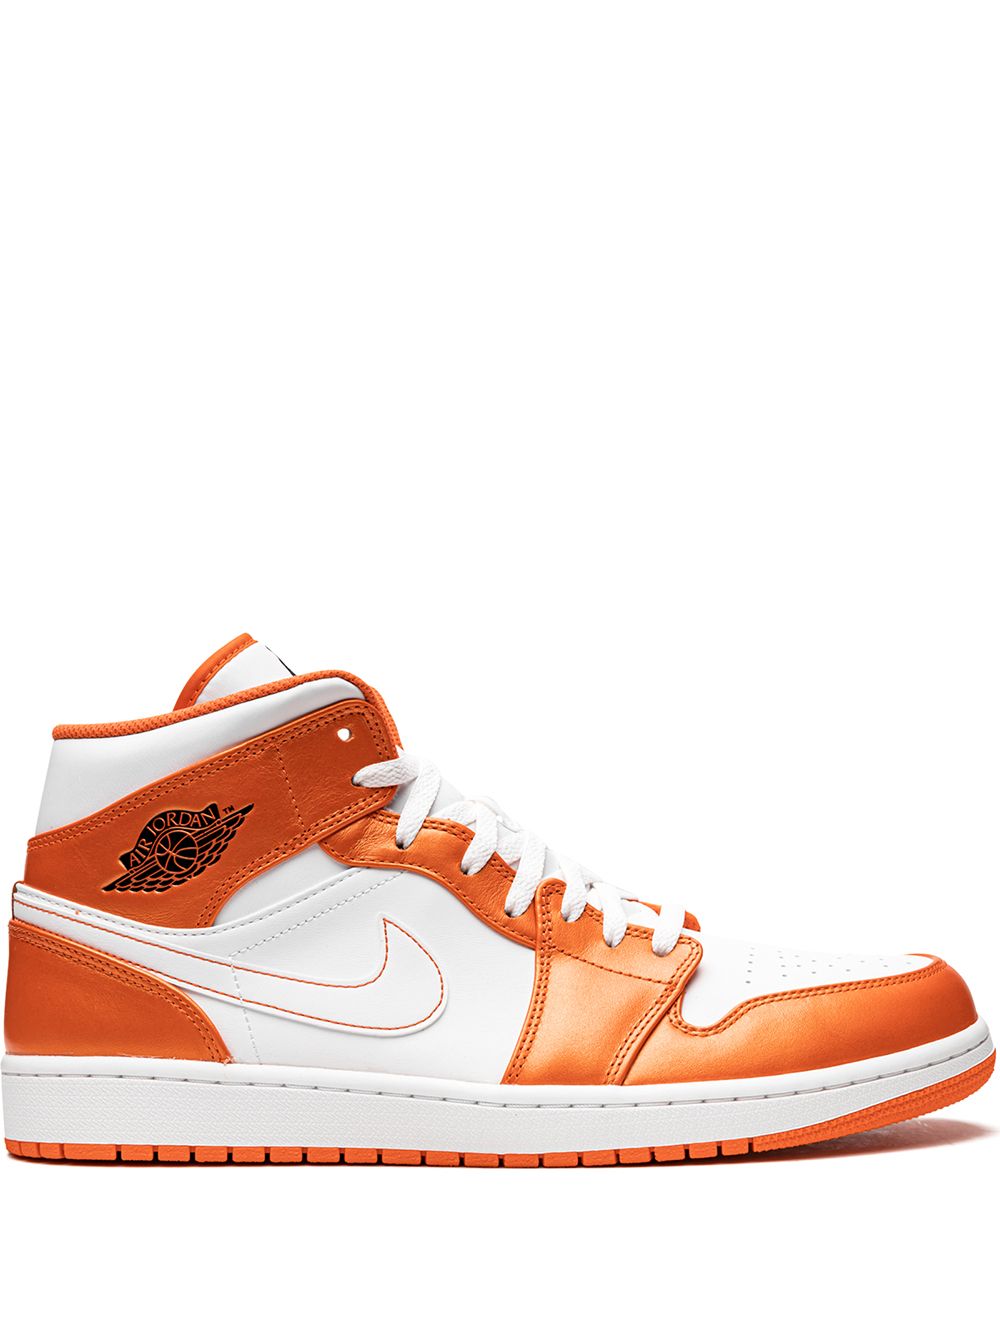 Jordan Air Jordan 1 Mid SE "Electro Orange" sneakers - White